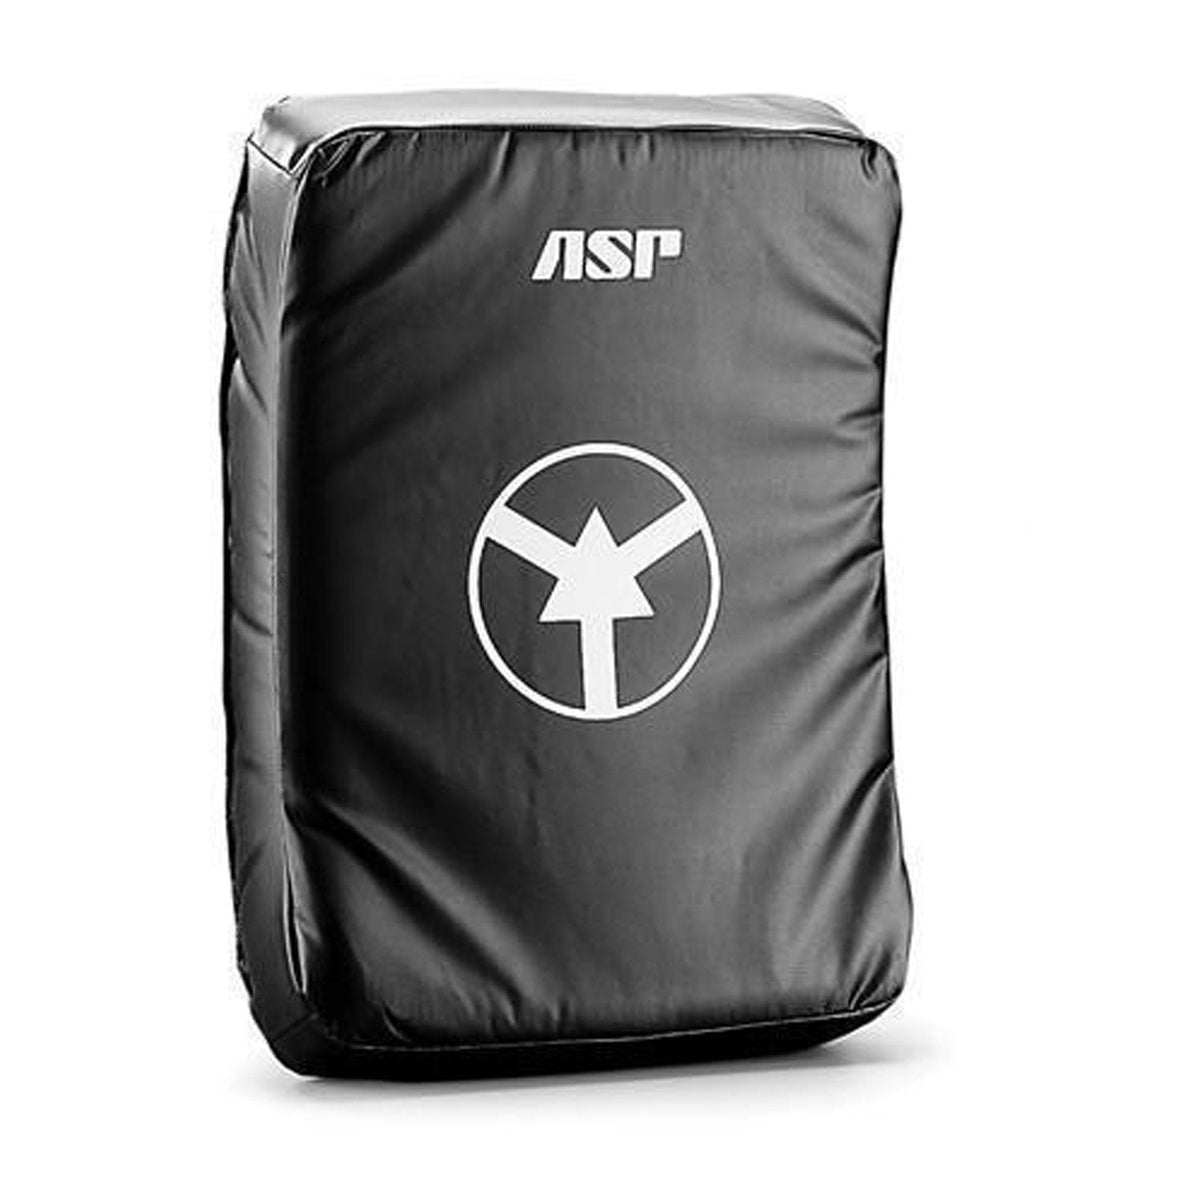 ASP Training Strike Bag Training ASP Tactical Gear Supplier Tactical Distributors Australia